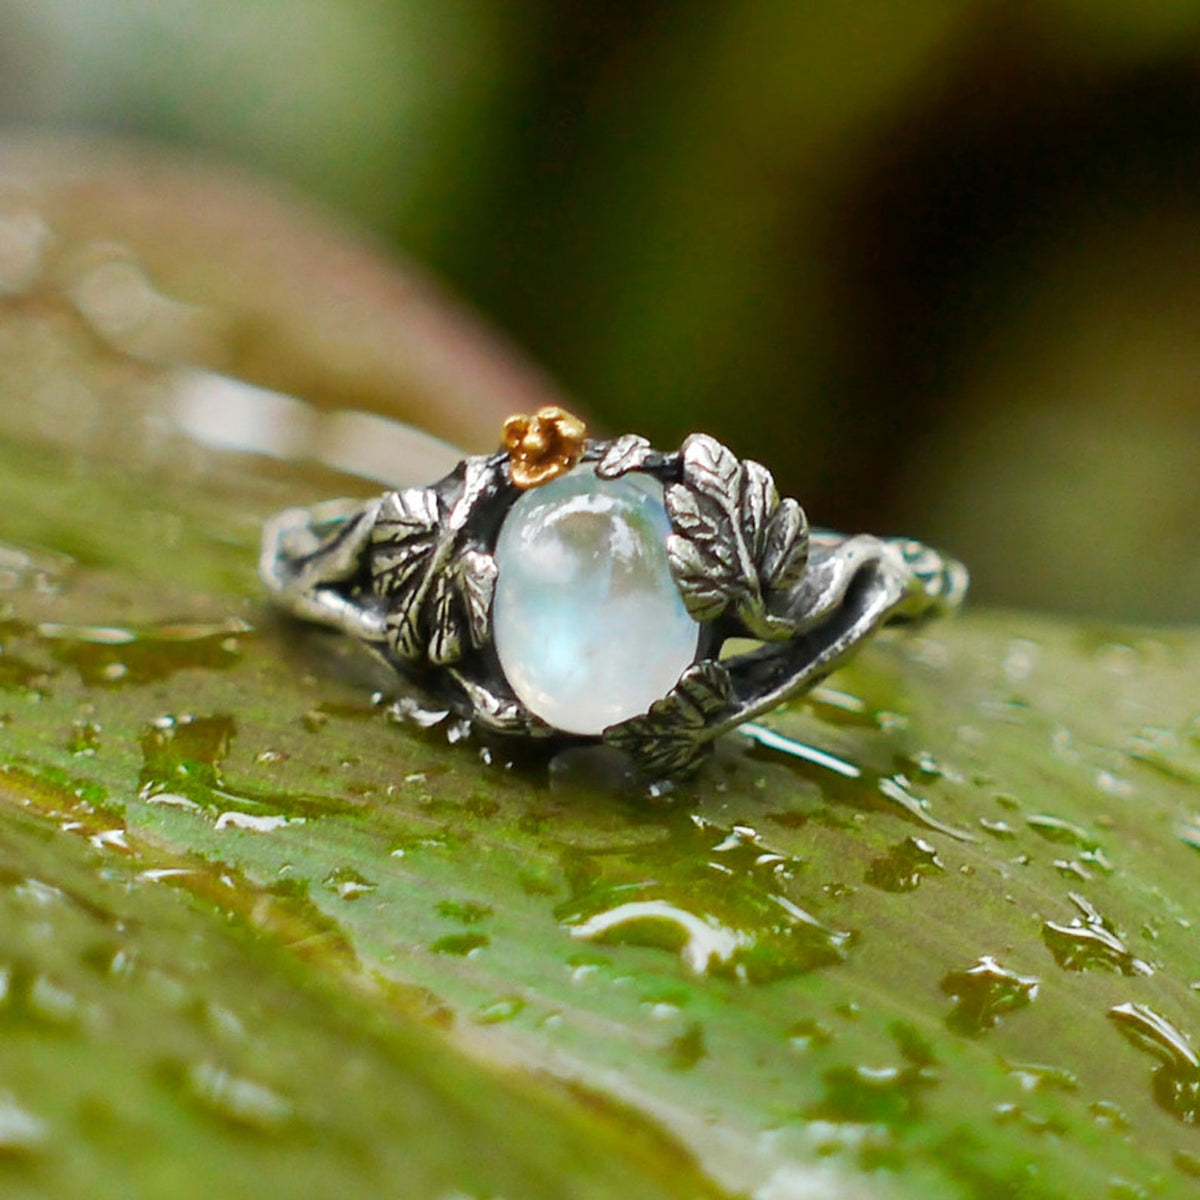 Moonstone engagement ring 